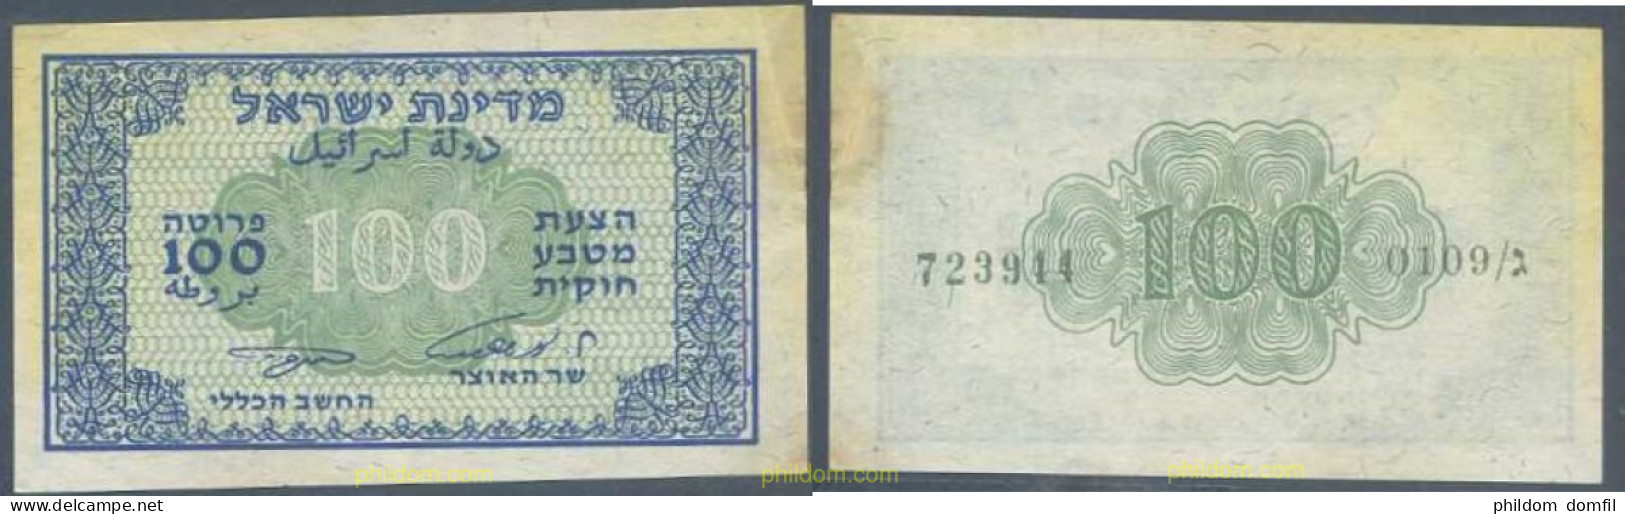 5368 ISRAEL 1952 ISRAEL 100 PRUTA 1952 FRACTIONAL CURRENCY ESHKOL ZAGAGI - Israël